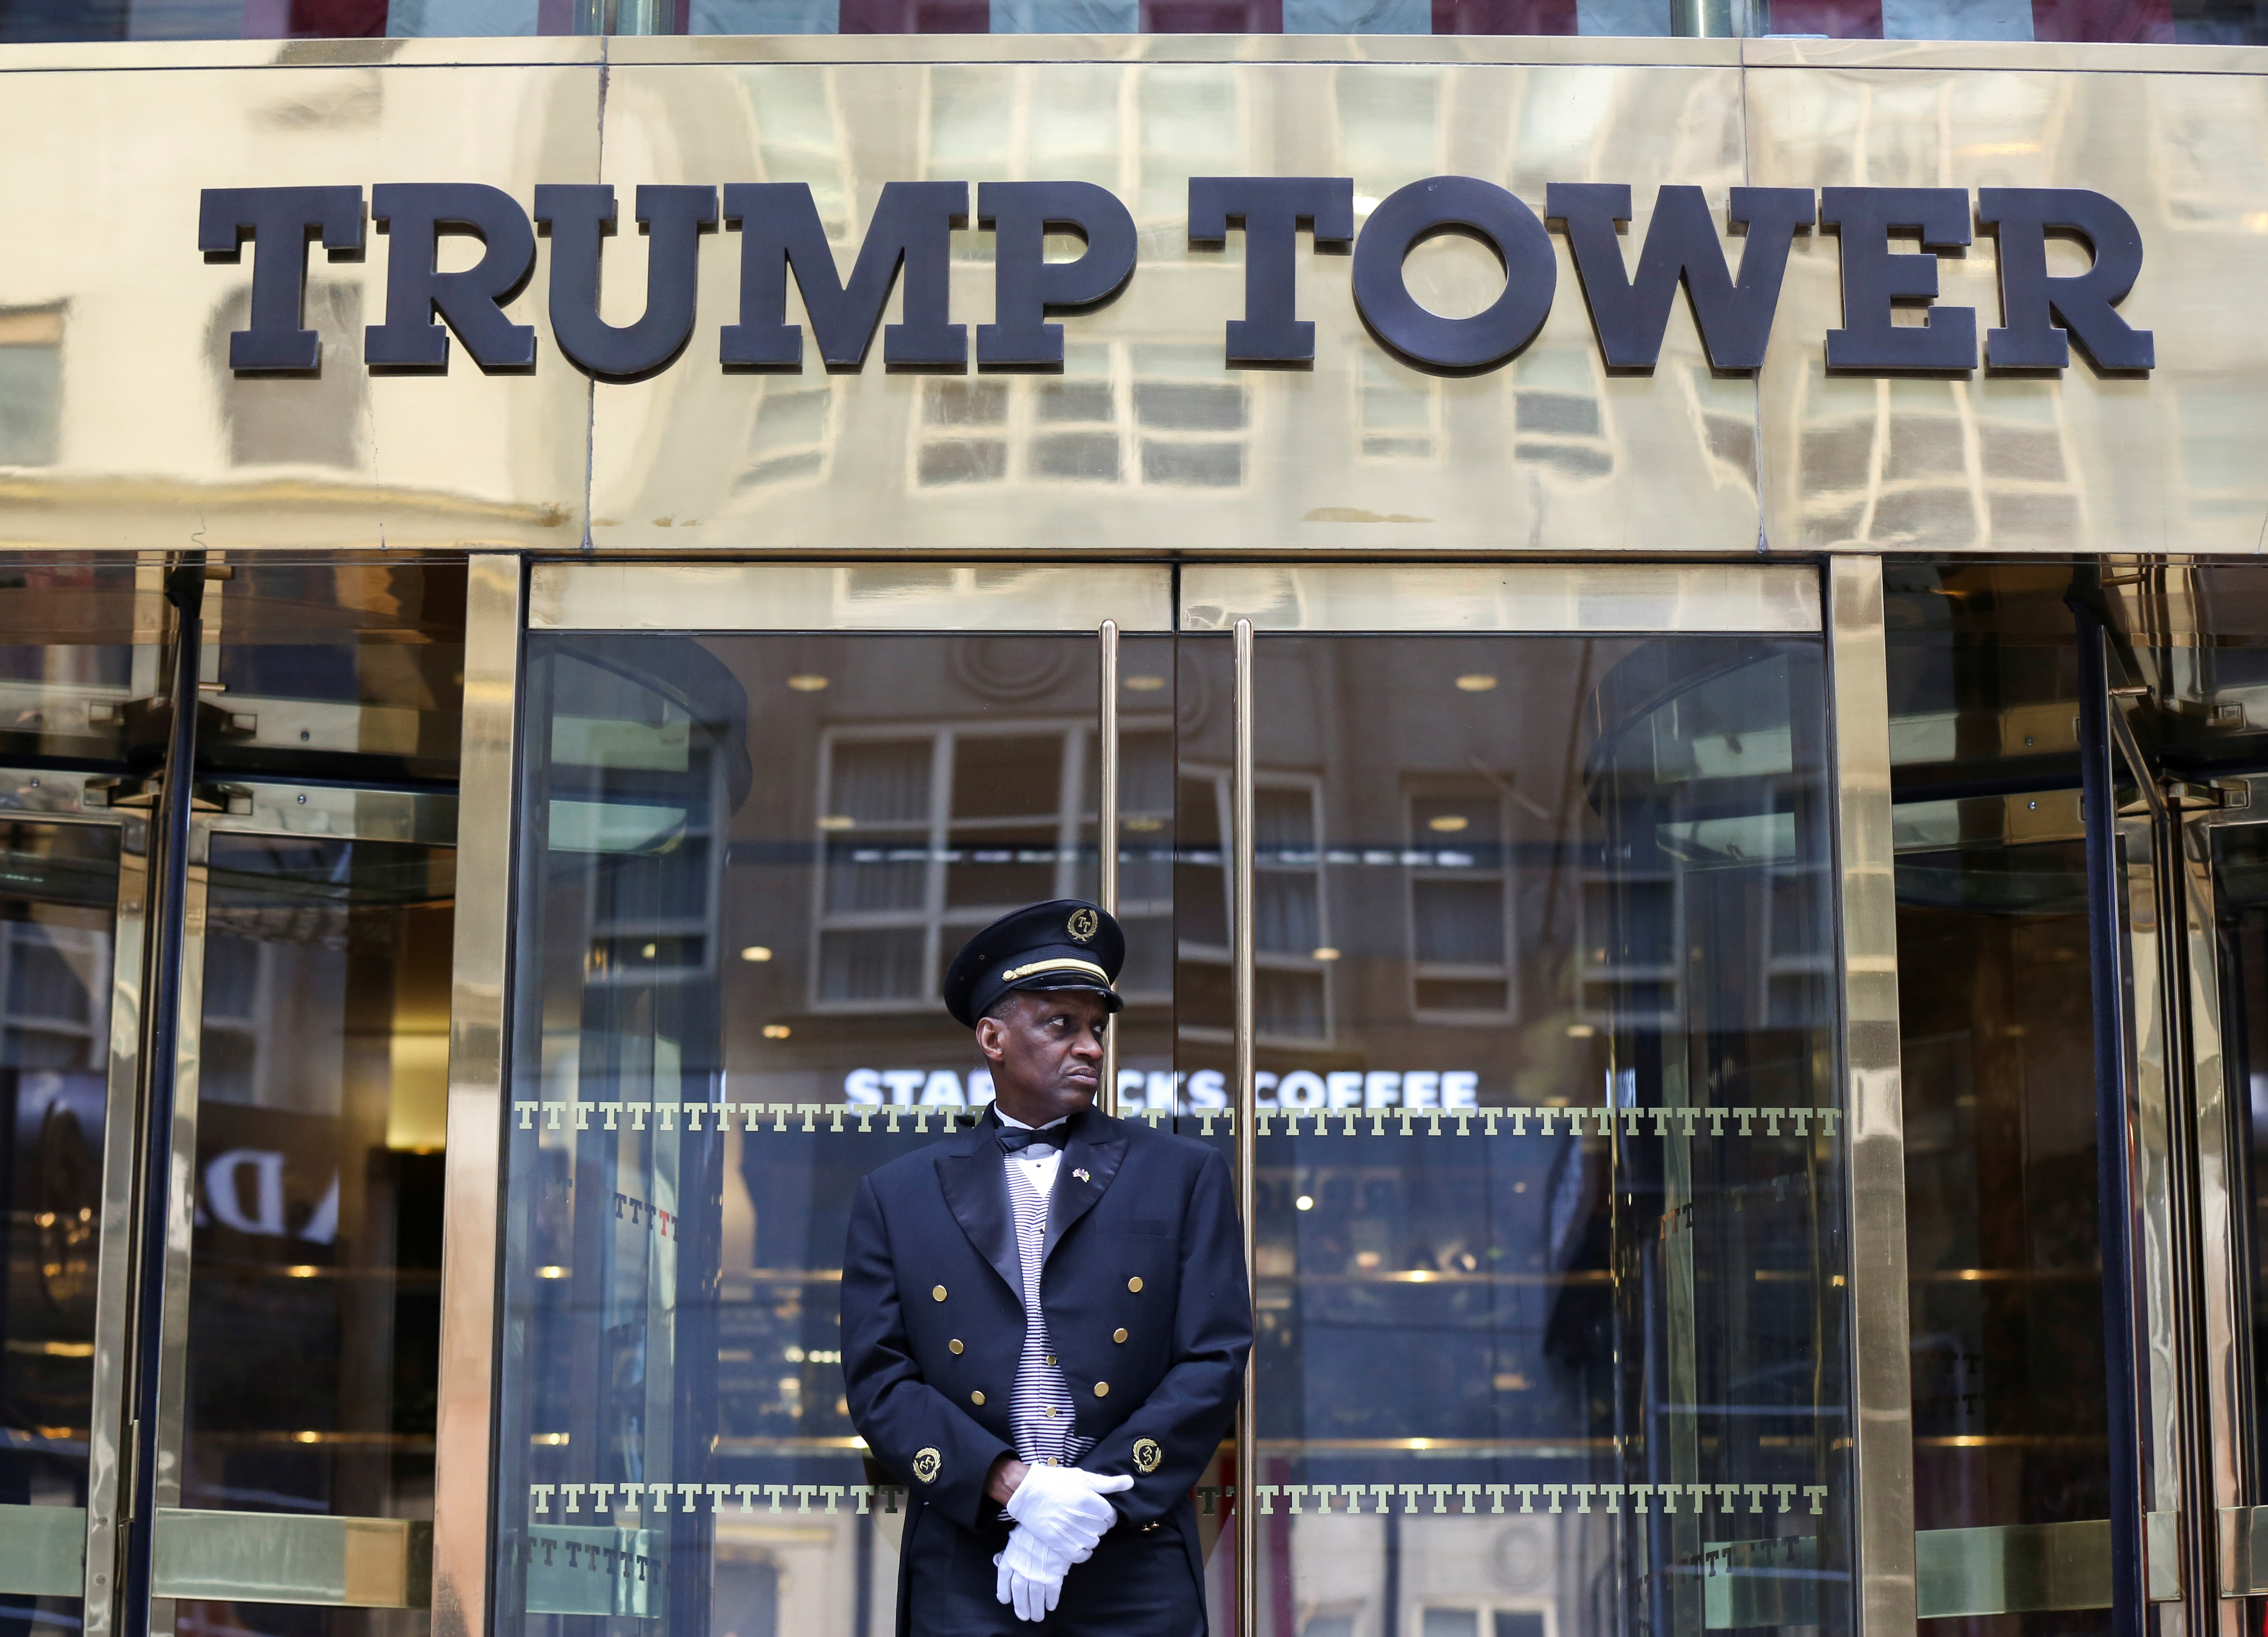 Trump Tower on 5th Avenue in the Manhattan borough of New York City, New York, U.S., April 18, 2019. REUTERS/Caitlin Ochs